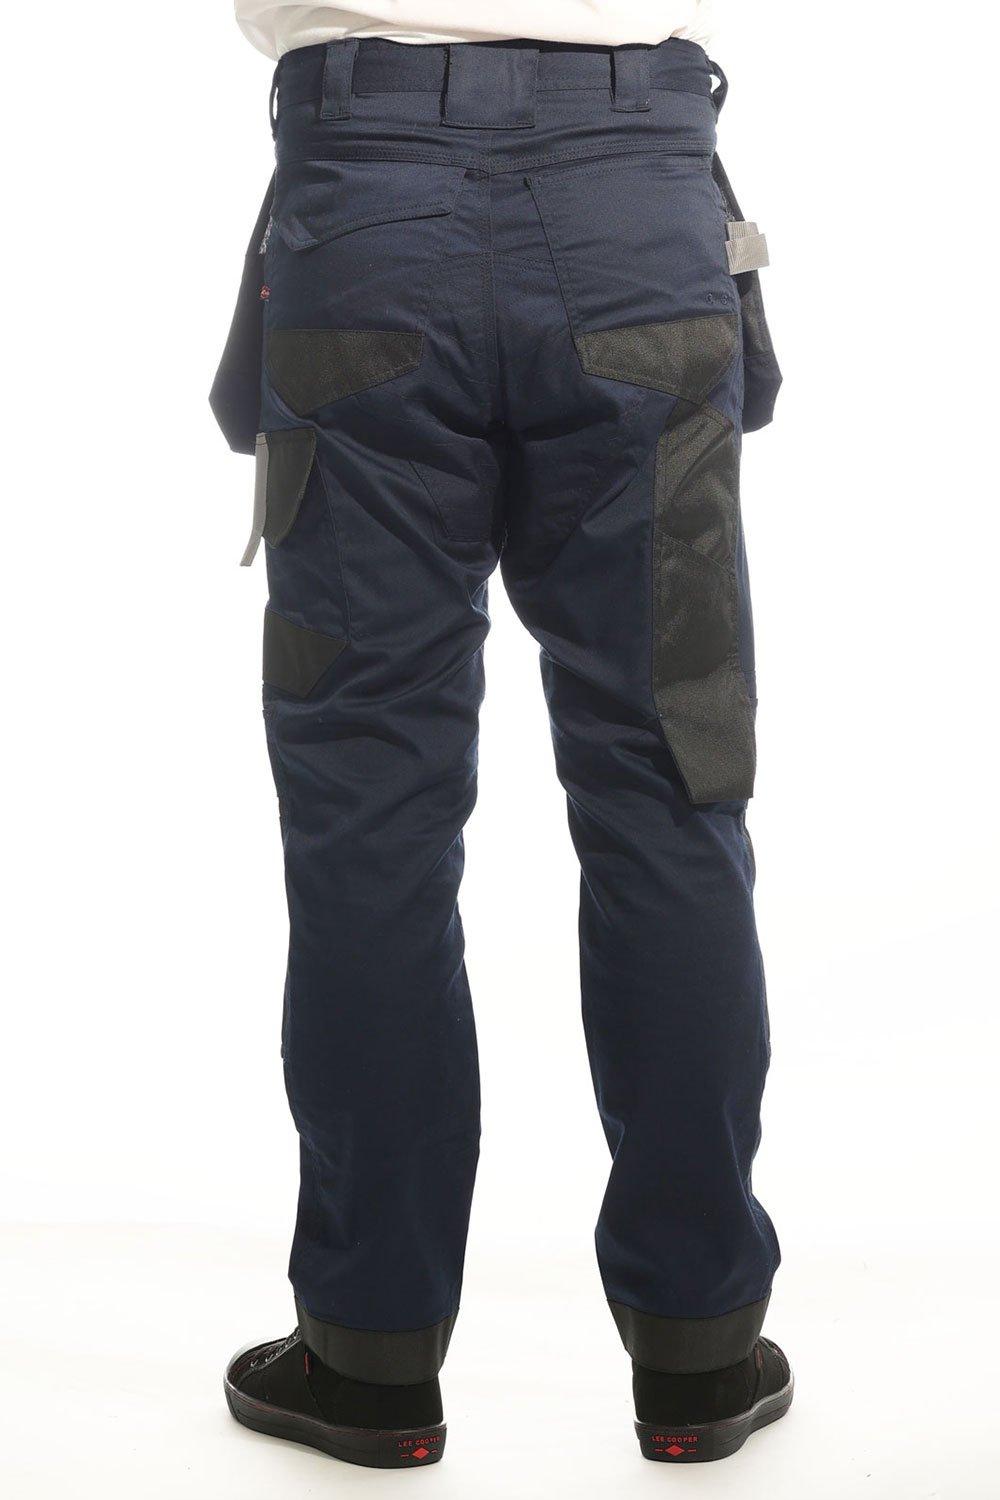 Buy Lee Cooper Relaxed Fit Solid Cargo Pants | Splash KSA